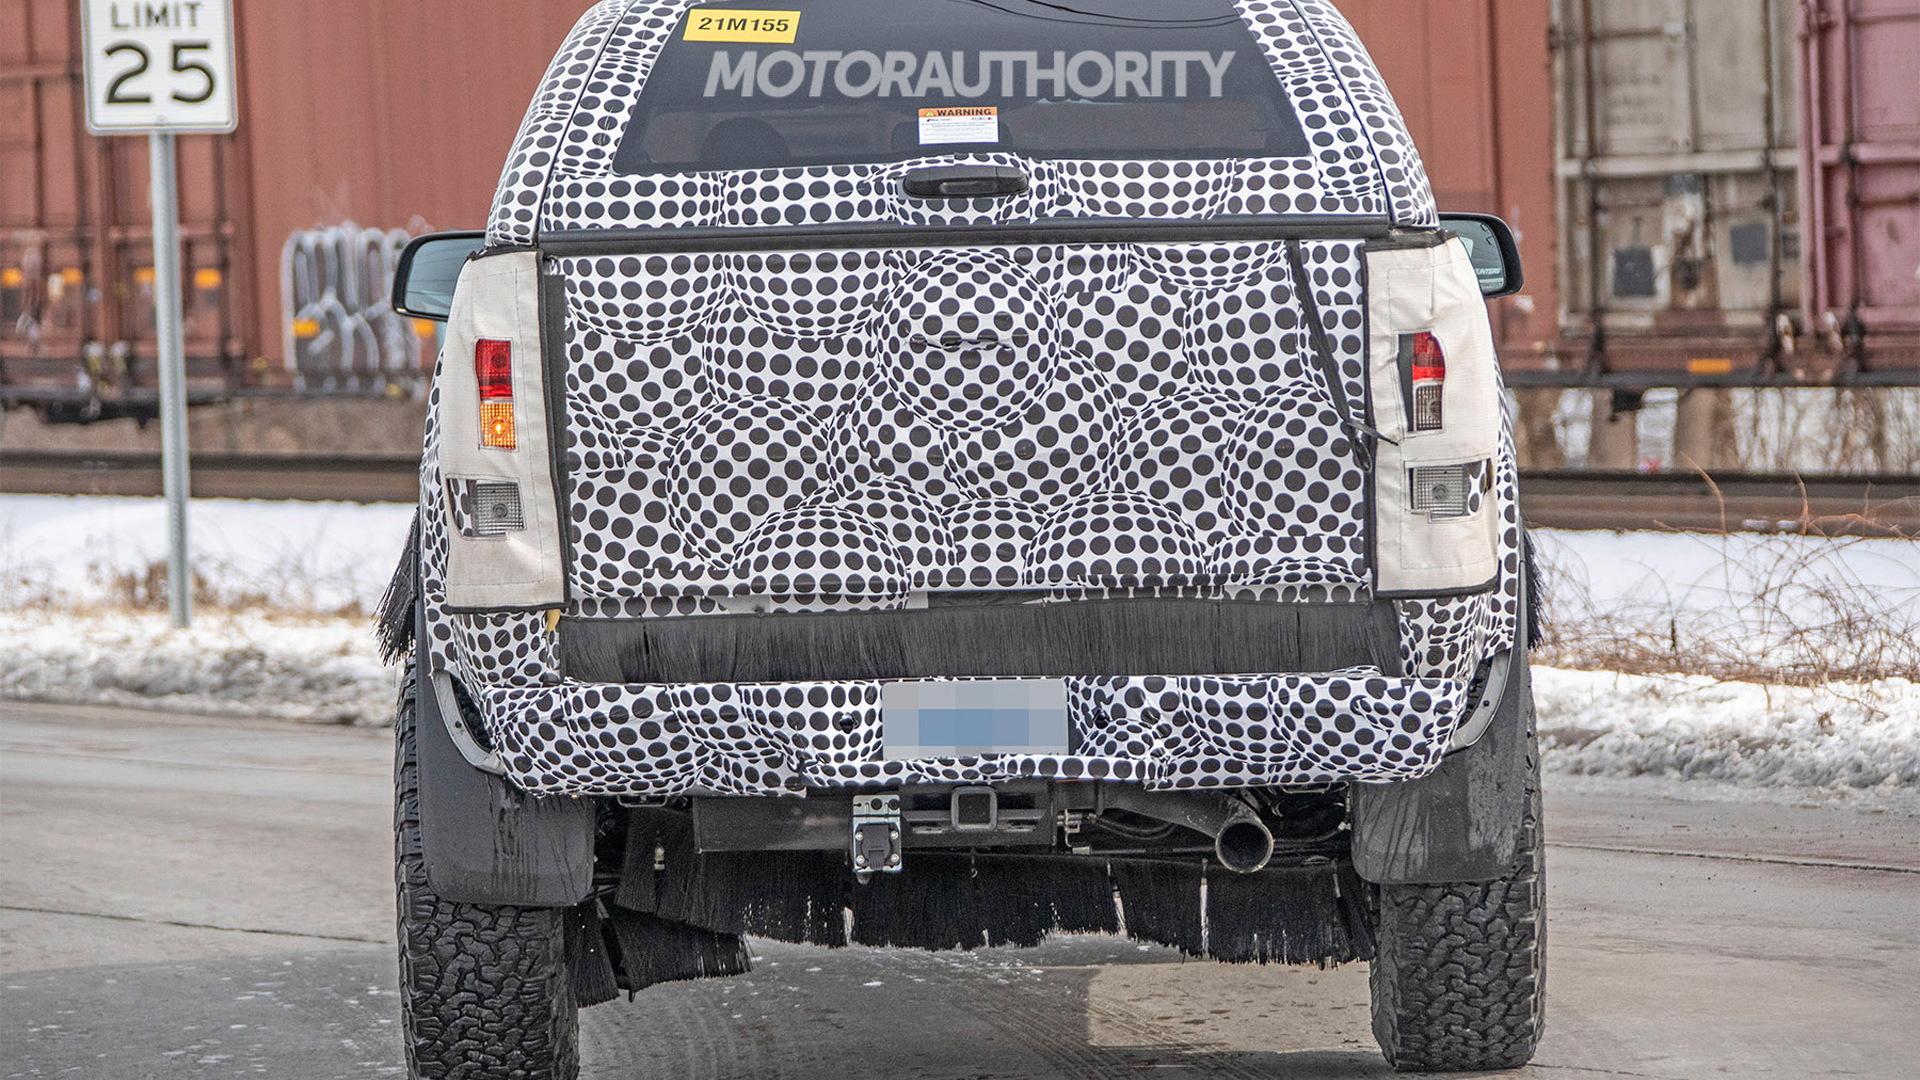 2021 Ford Bronco test mule spy shots - Image via S. Baldauf/SB-Medien